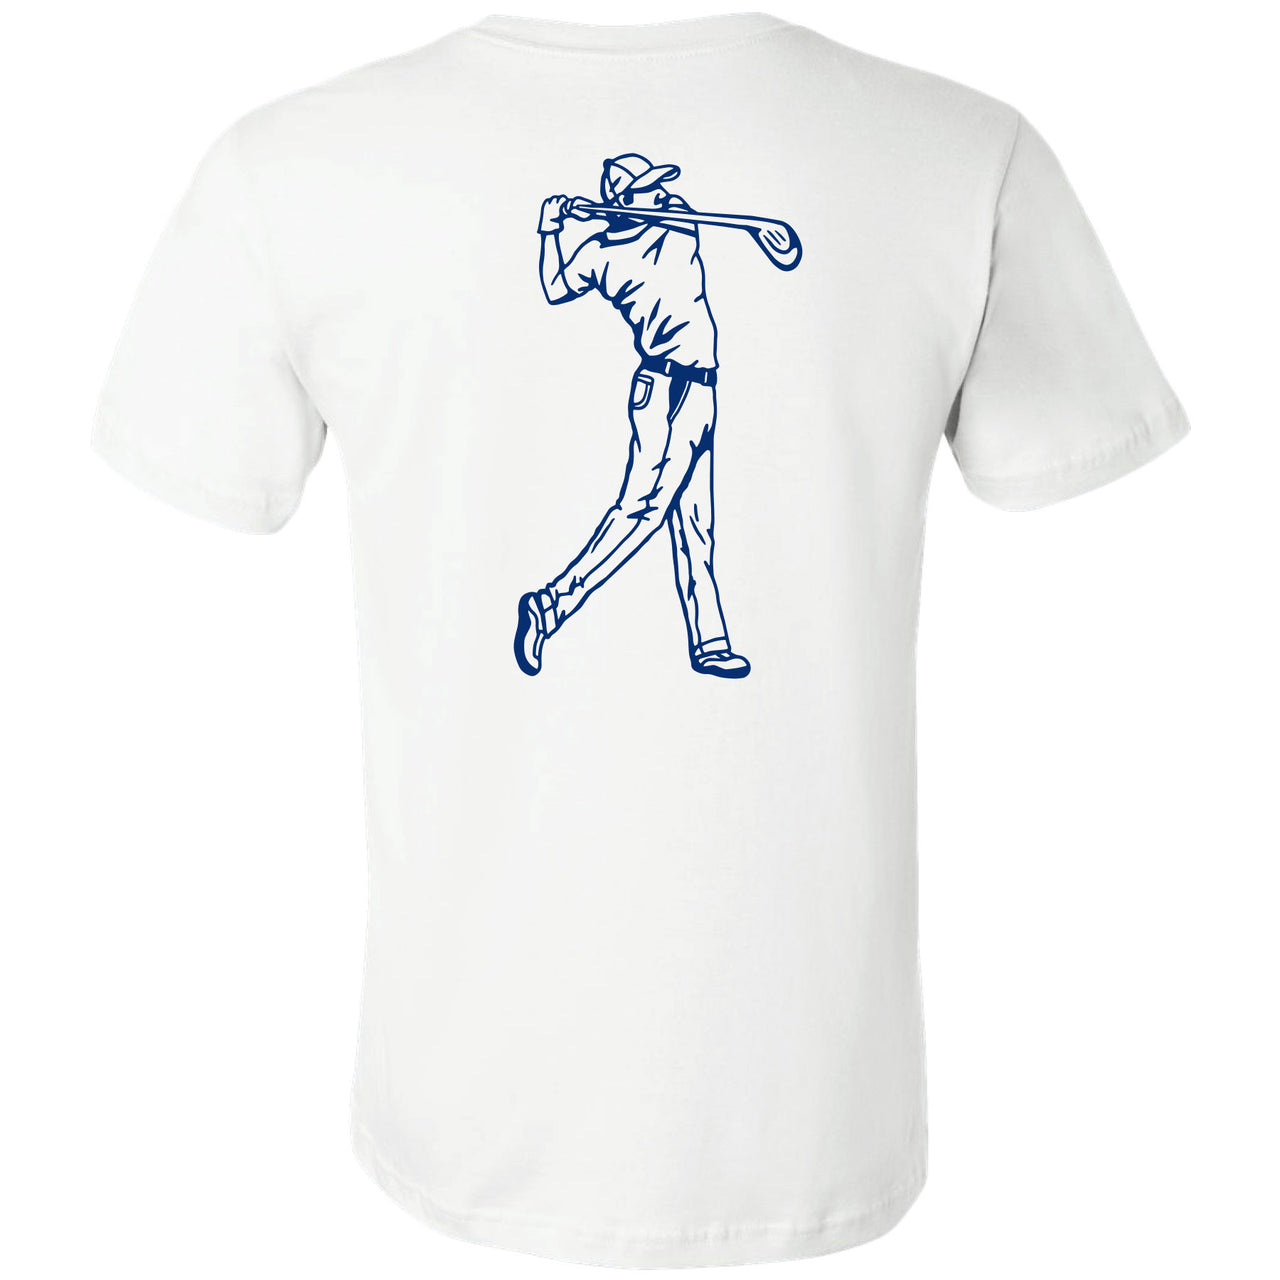 Michelob Ultra - Golf 2-sided Driver T-shirt